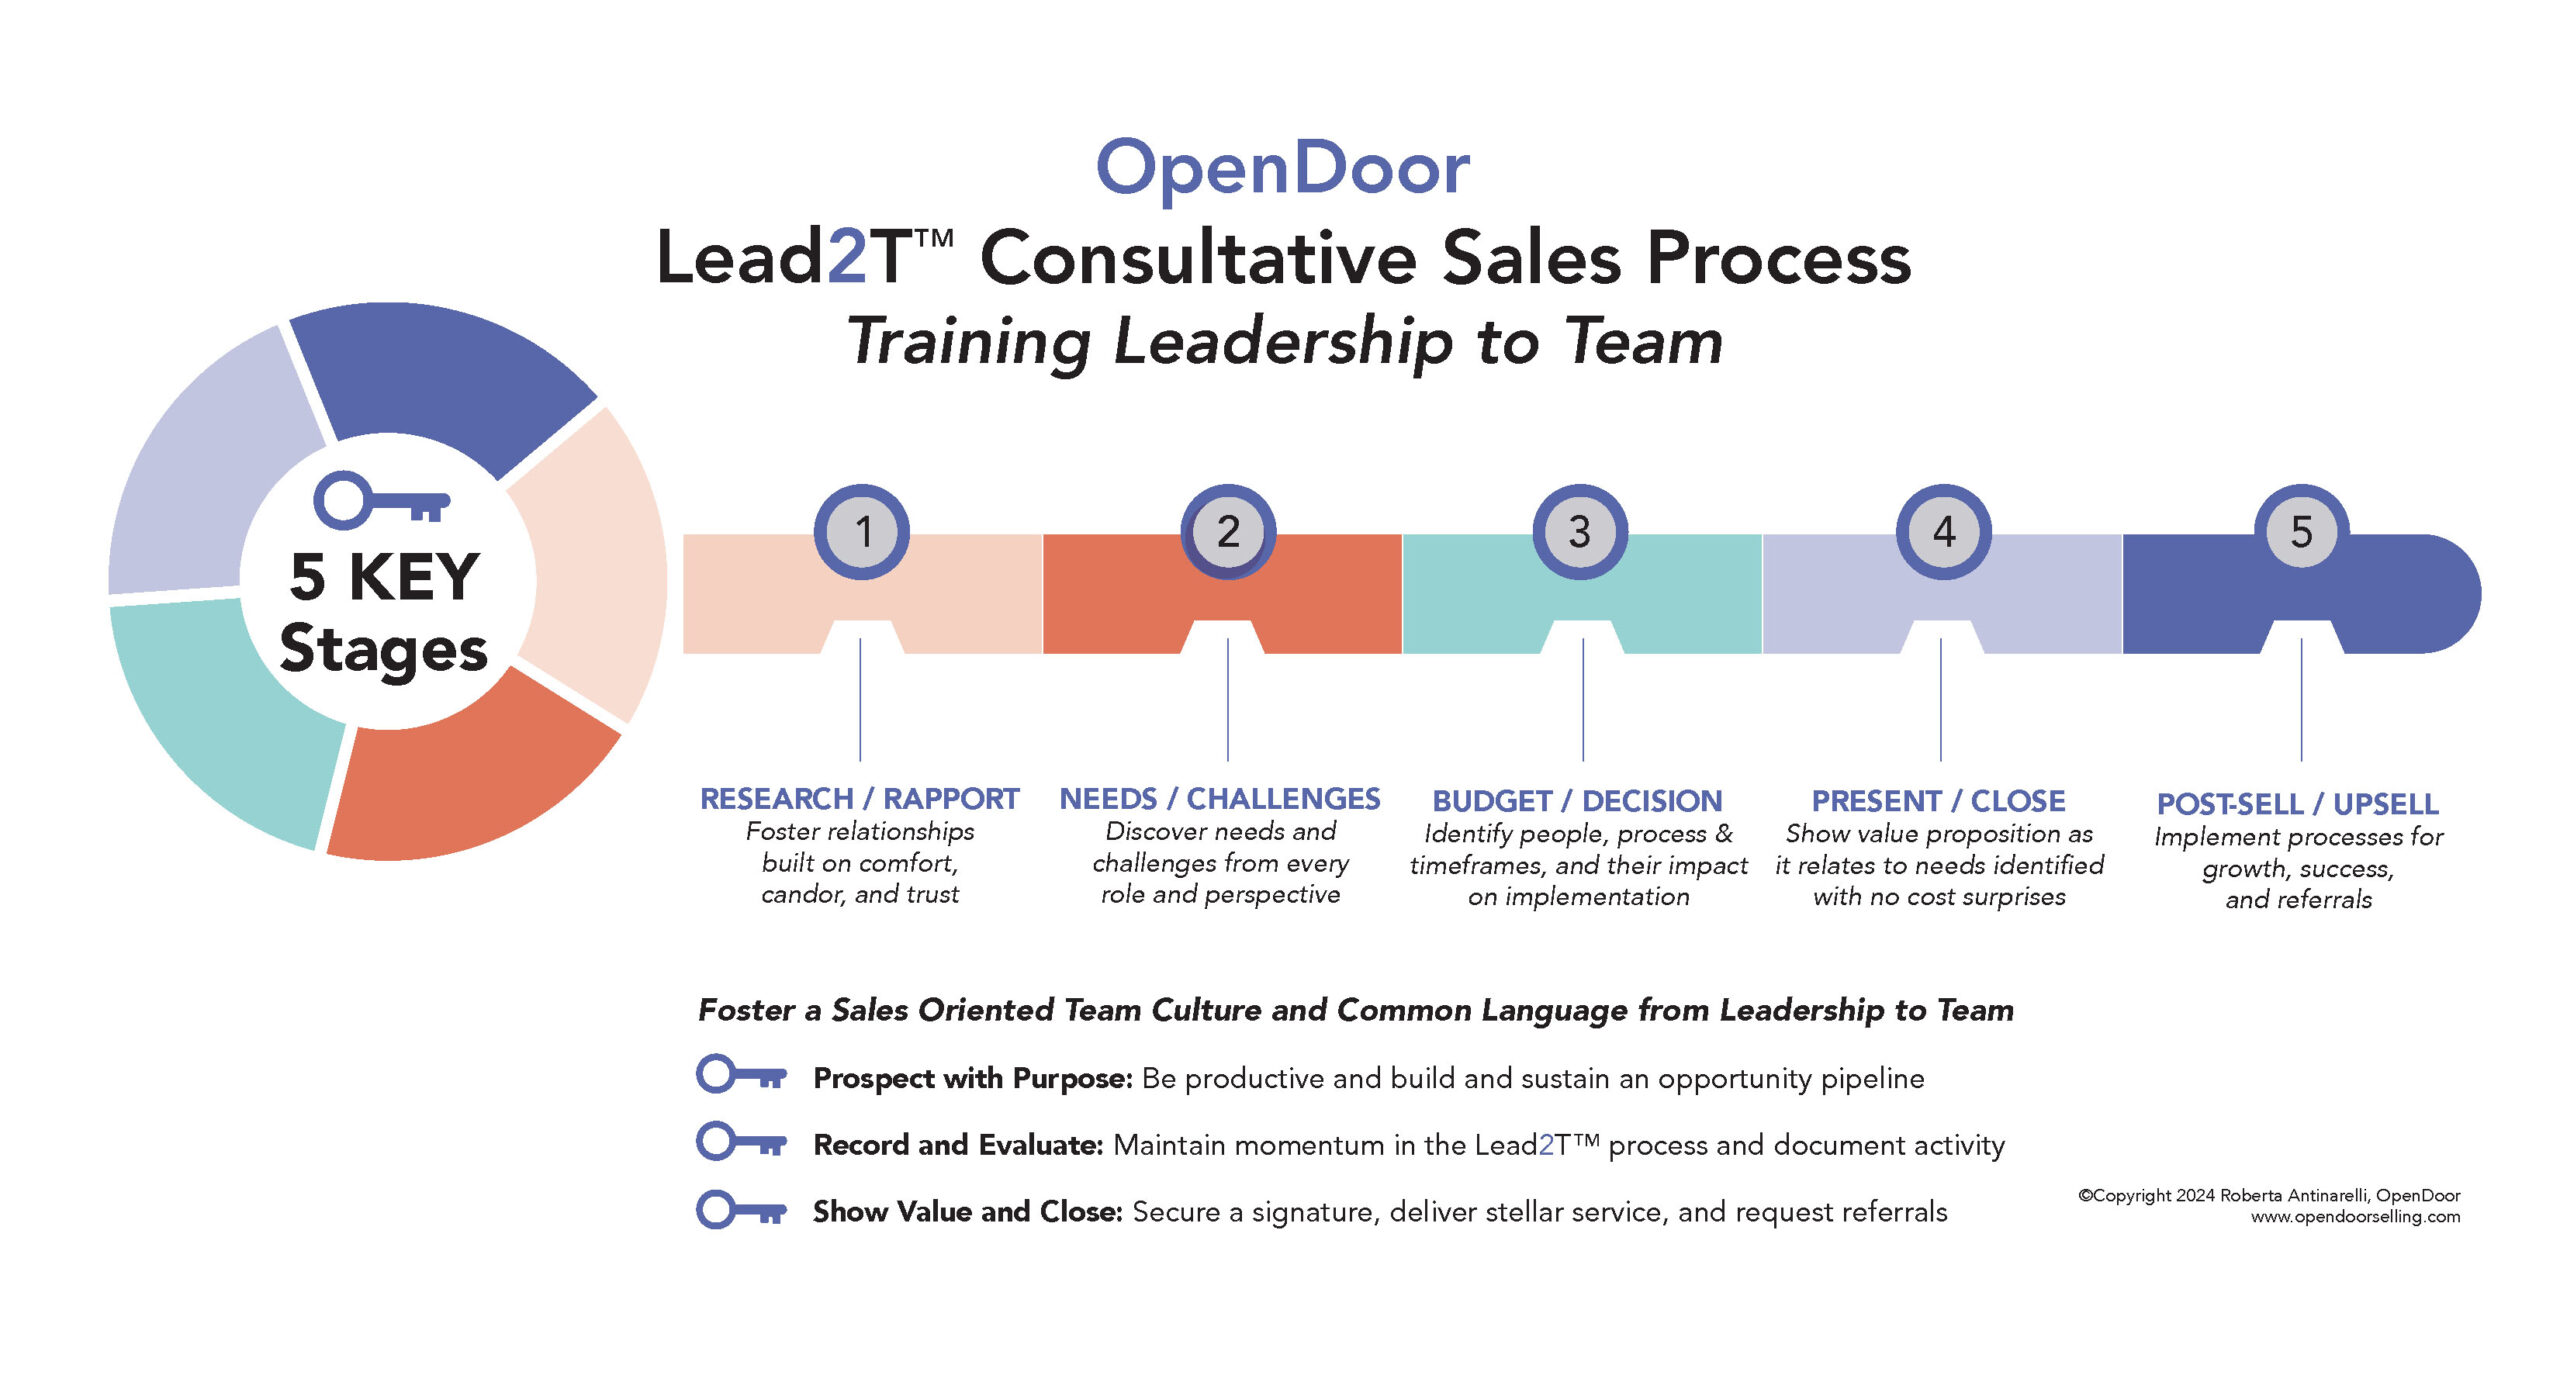 Lead2T Consultative Sales Process overview